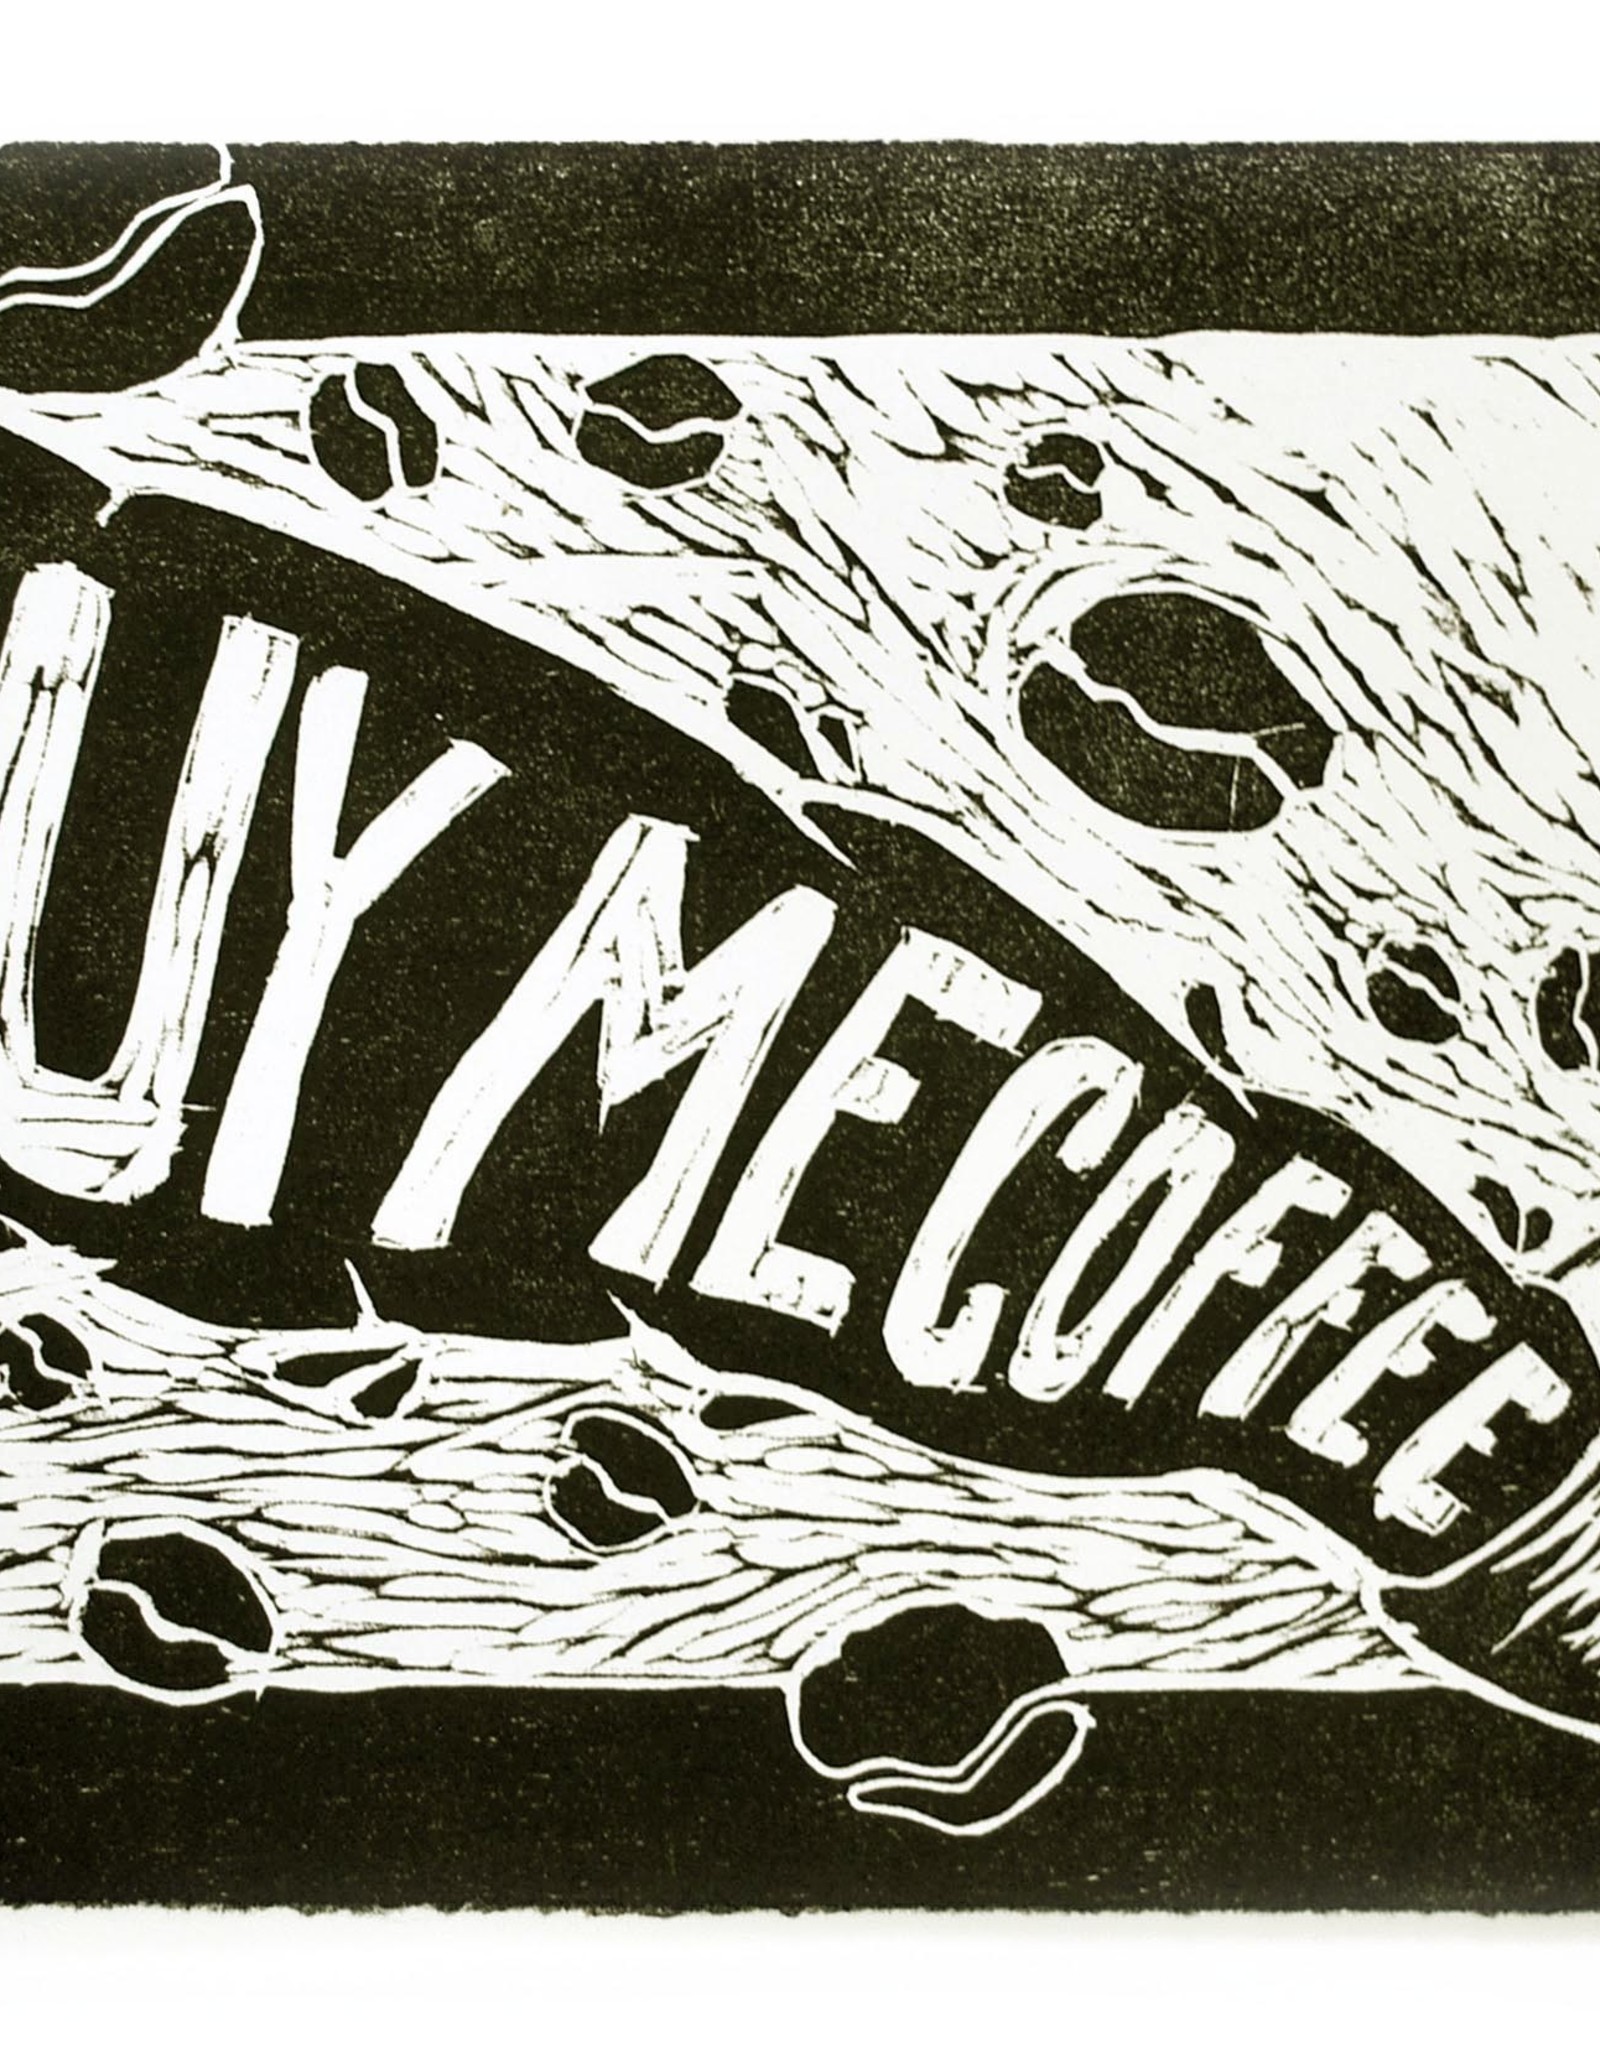 “Buy Me Coffee” by Sidney Trobee